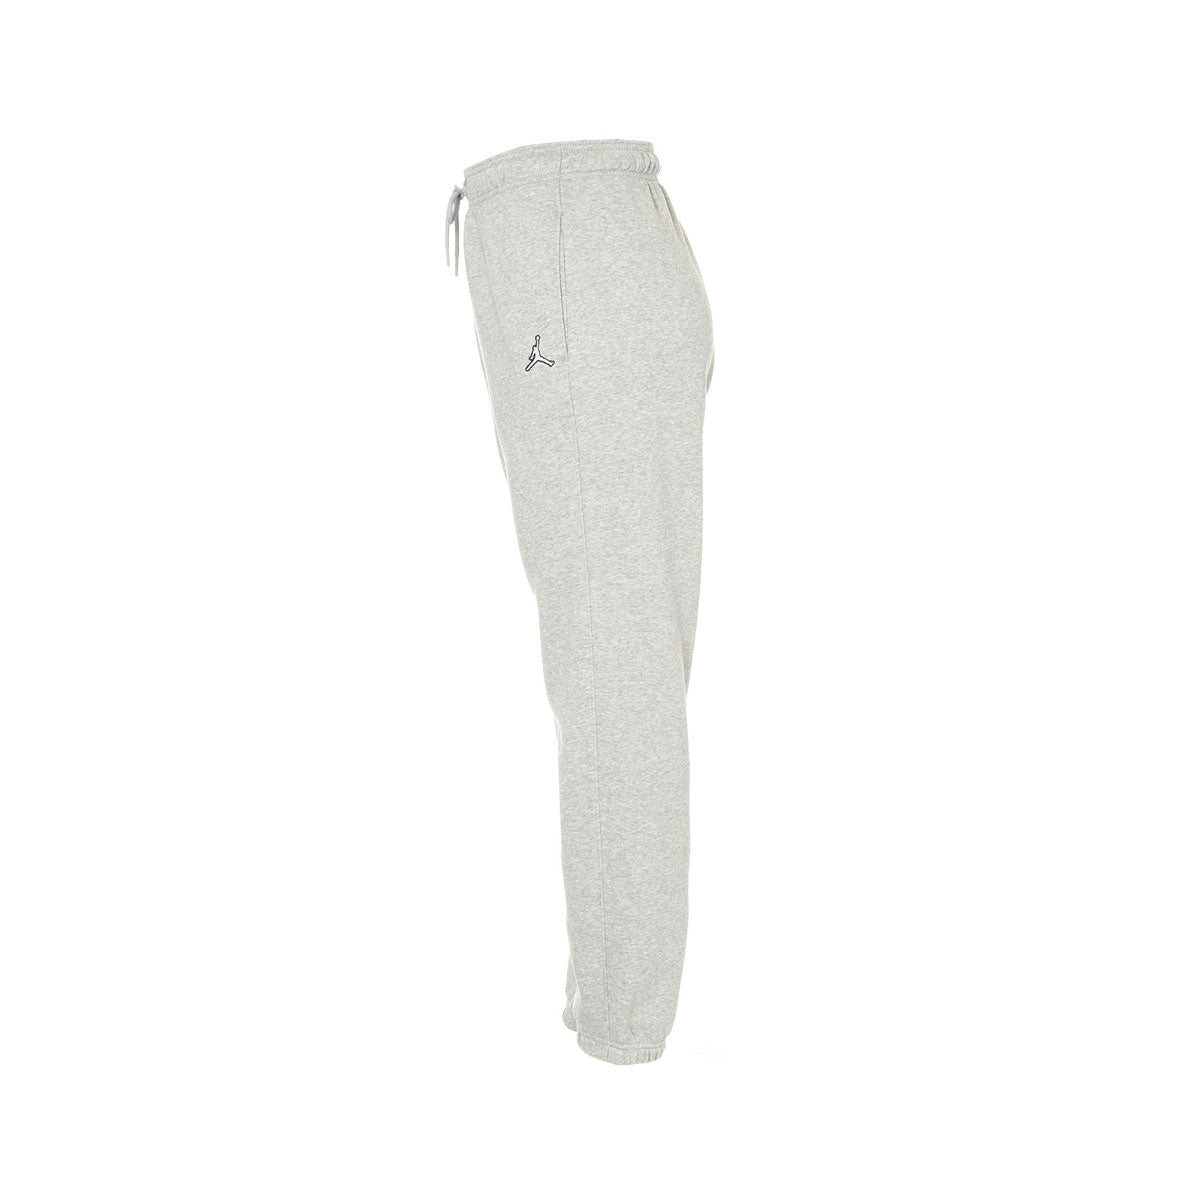 Air Jordan Women's Brooklyn Fleece Pants